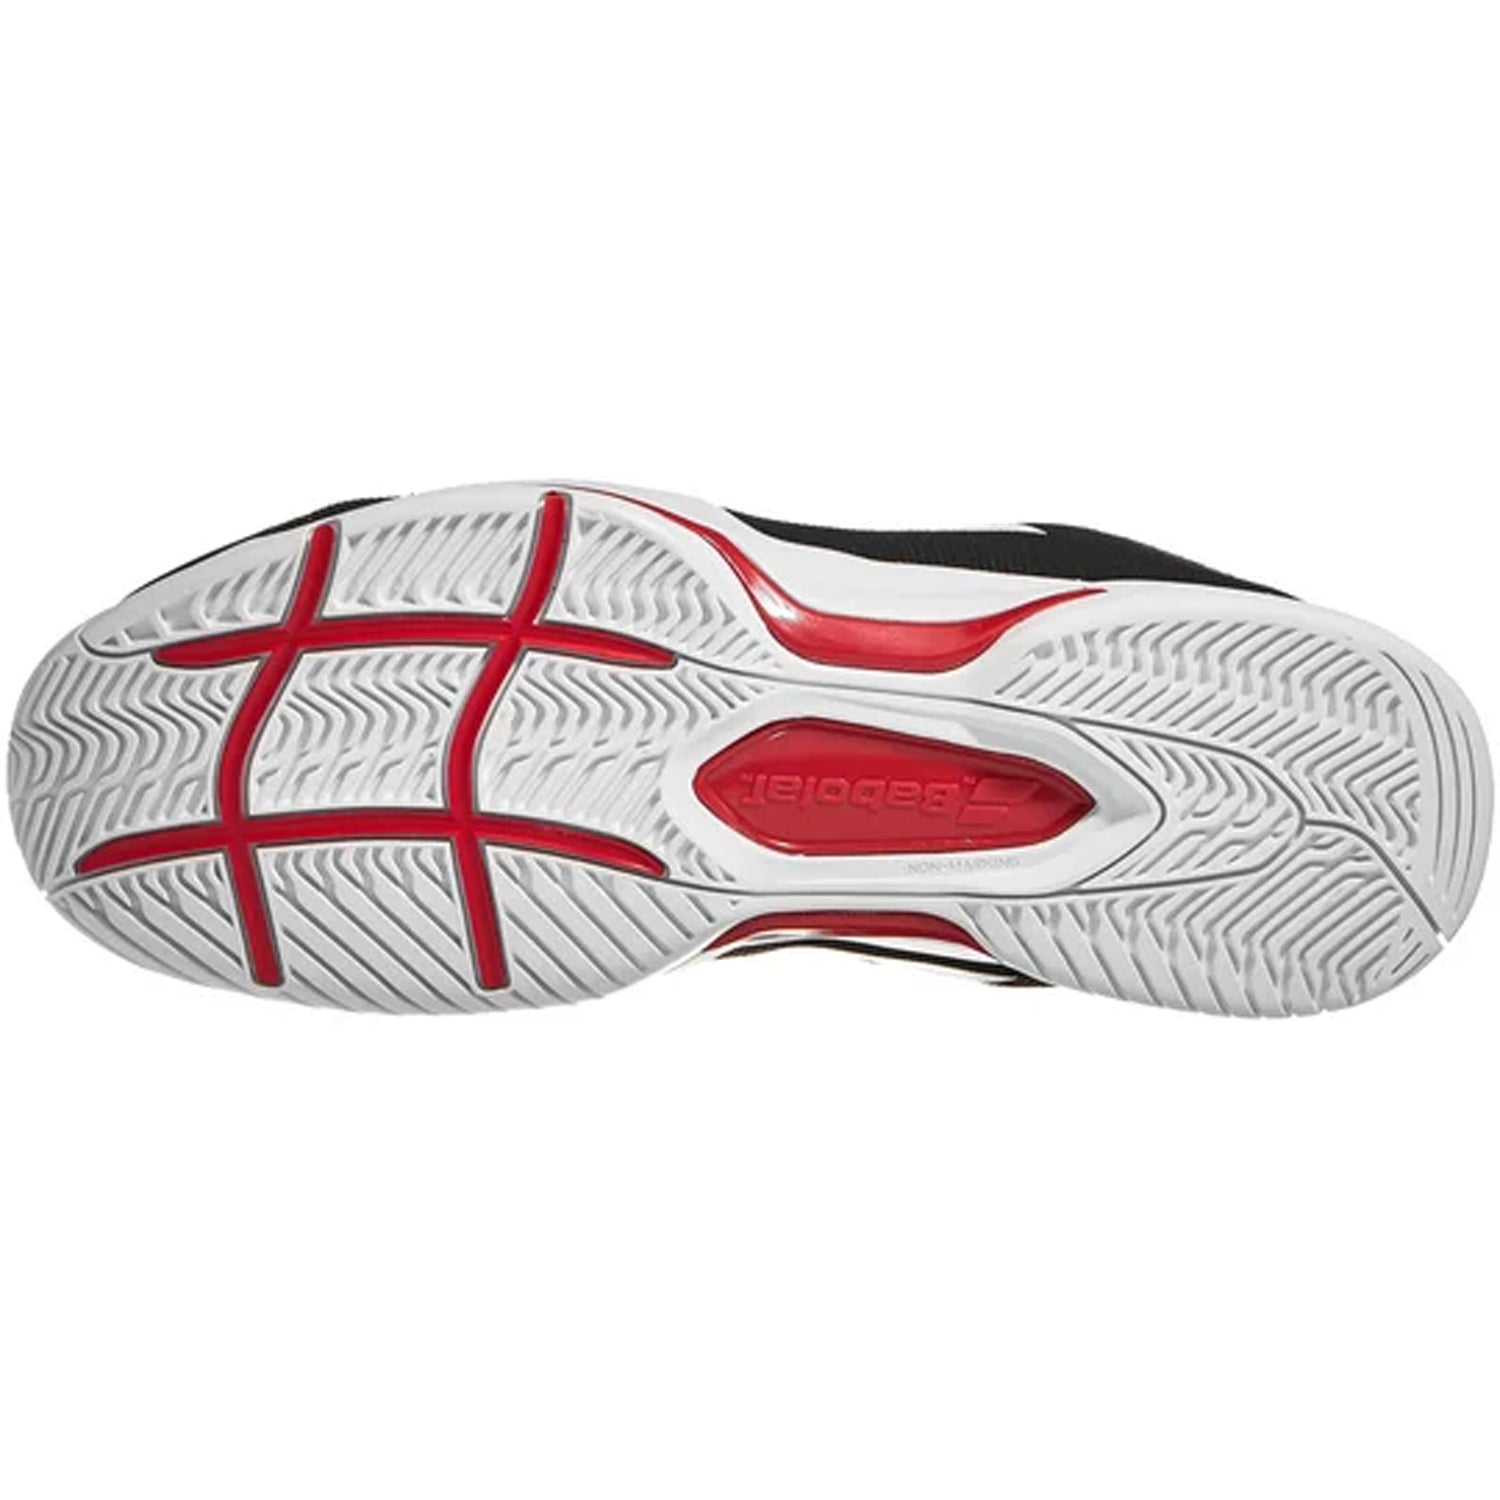 Babolat SFX3 All Court Men Tennis Shoe, Black/Poppy Red - Best Price online Prokicksports.com